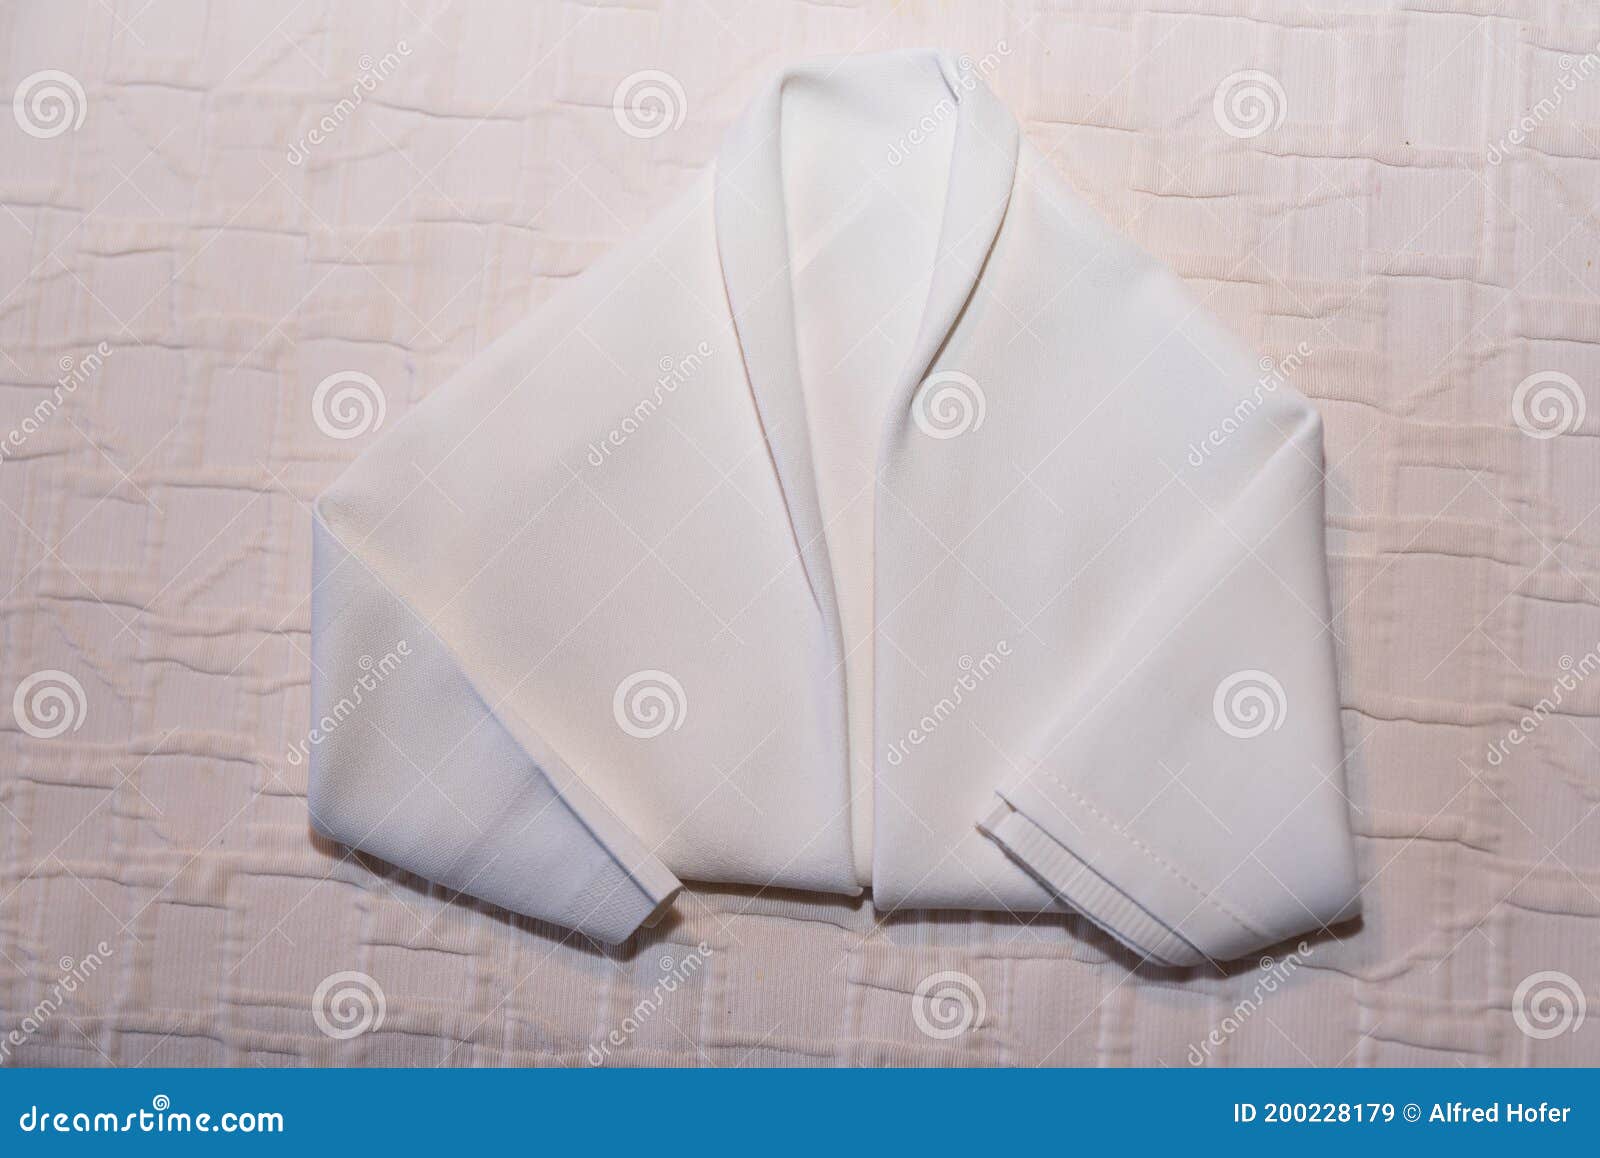 Premium Photo  Hermosas servilletas de tela blanca con la